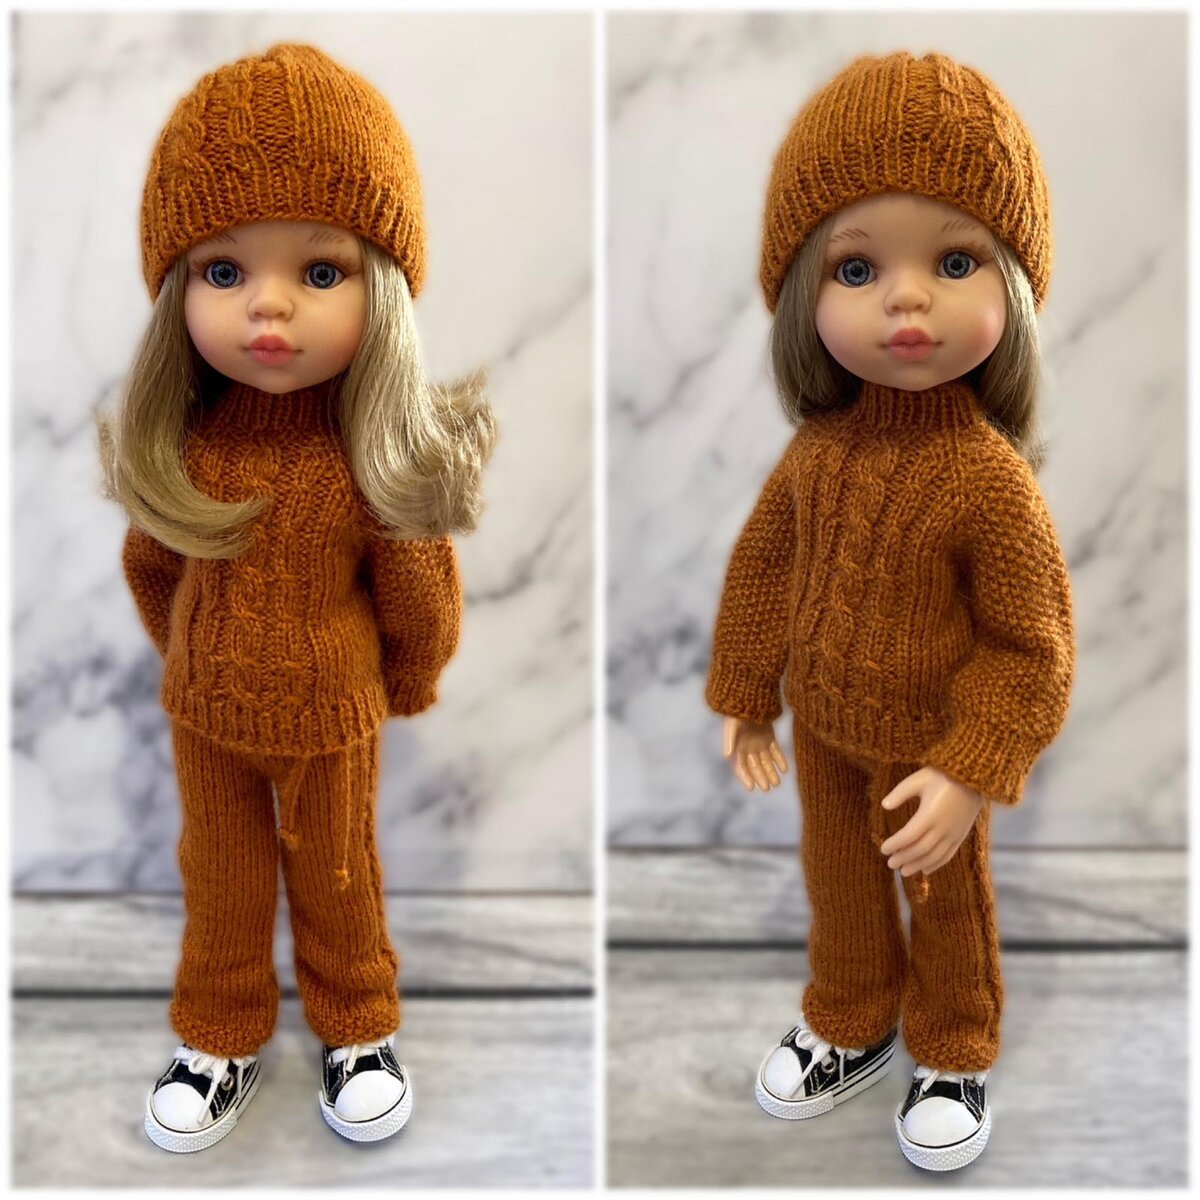 Лариса Пронина Одежда для кукол и детей - exclusive content on Boosty